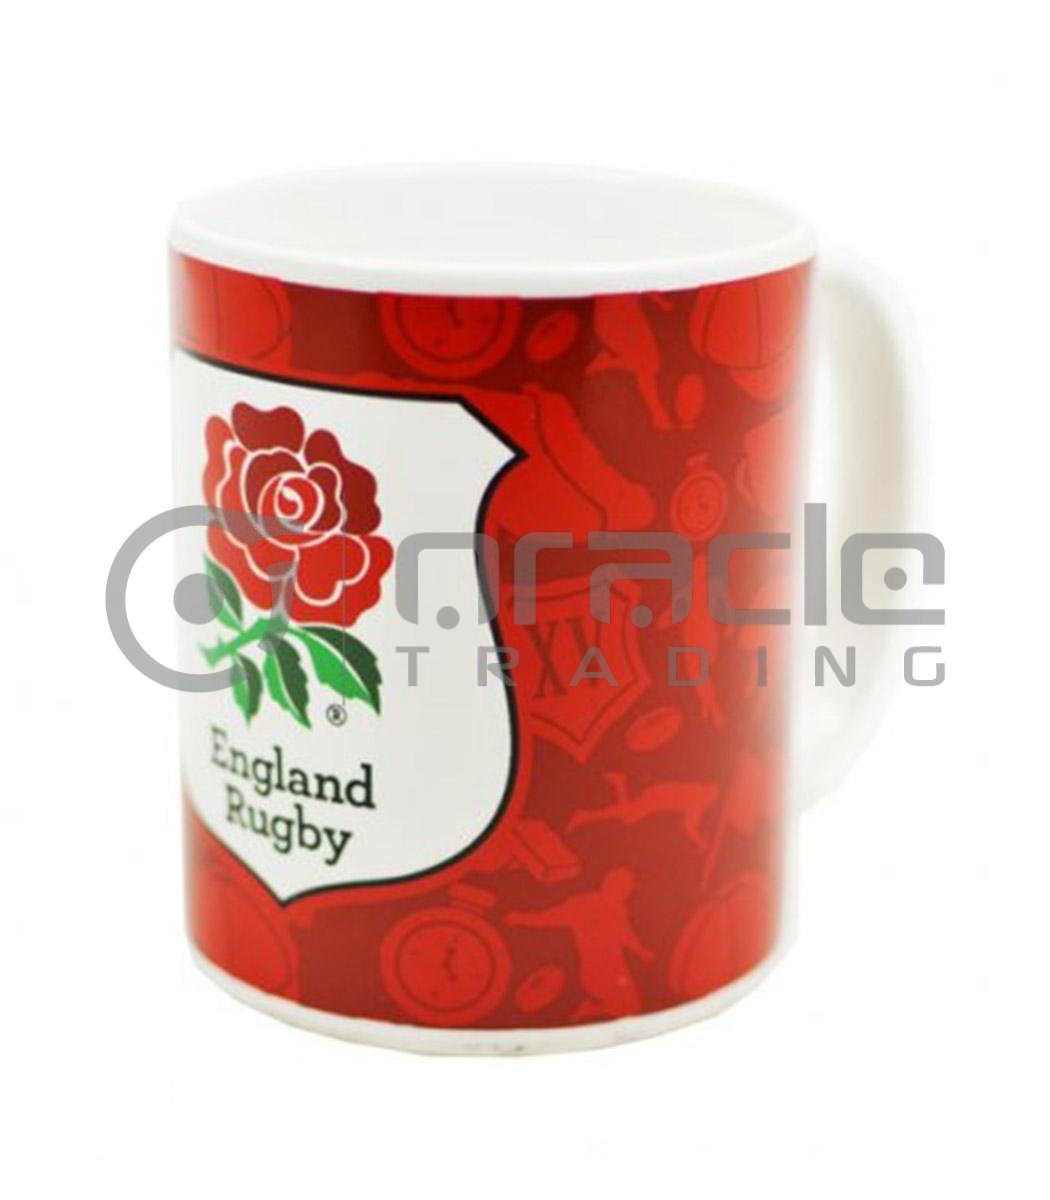 England Rugby Mug - Crest